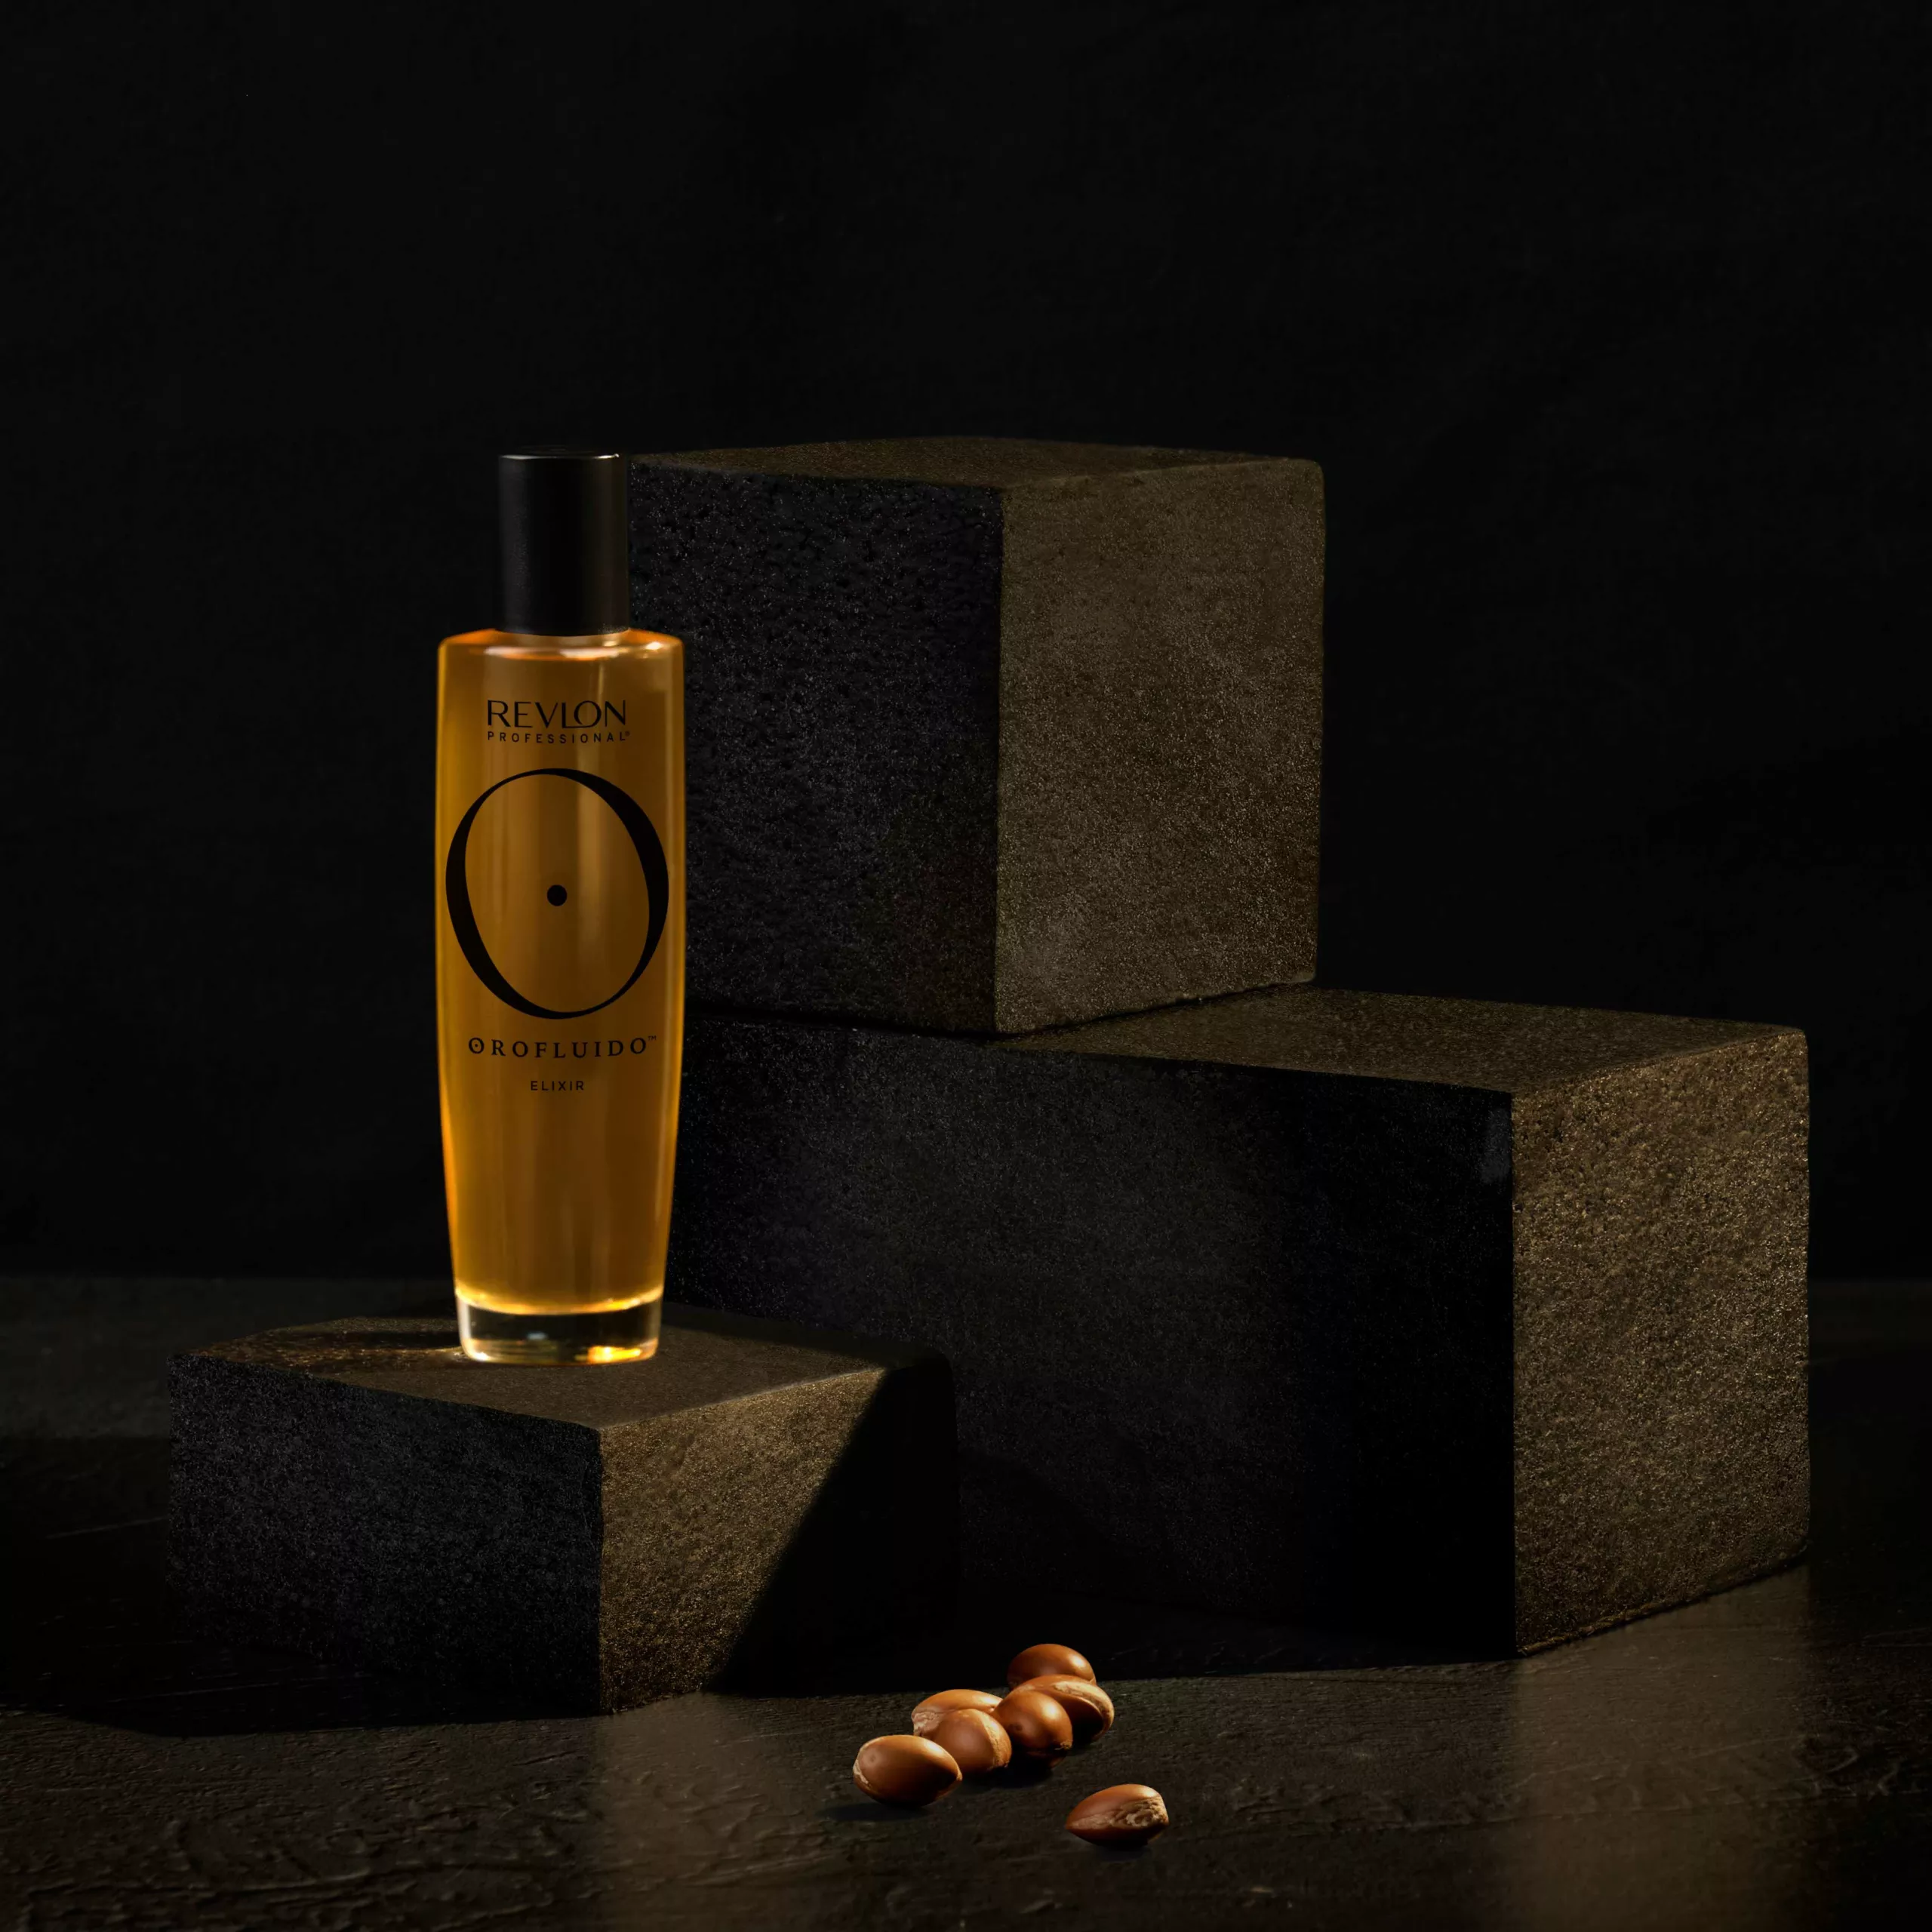 Elixir Revlon Original - Professional Orofluido™